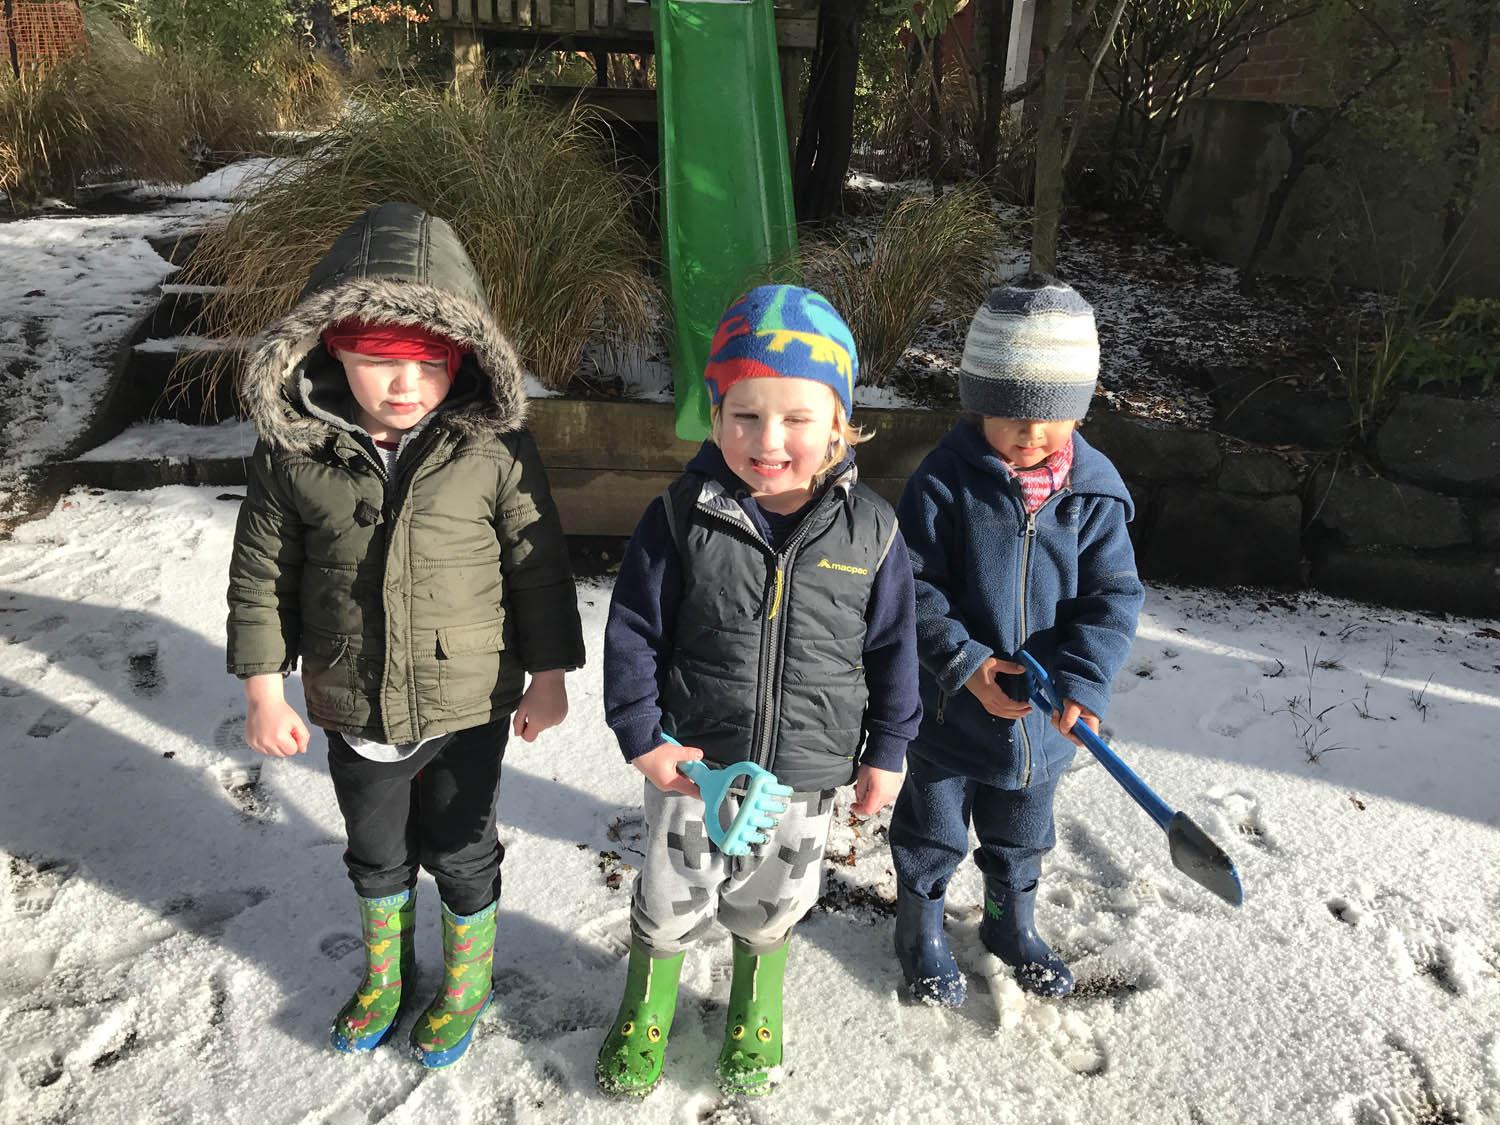 Three children in winter clothing